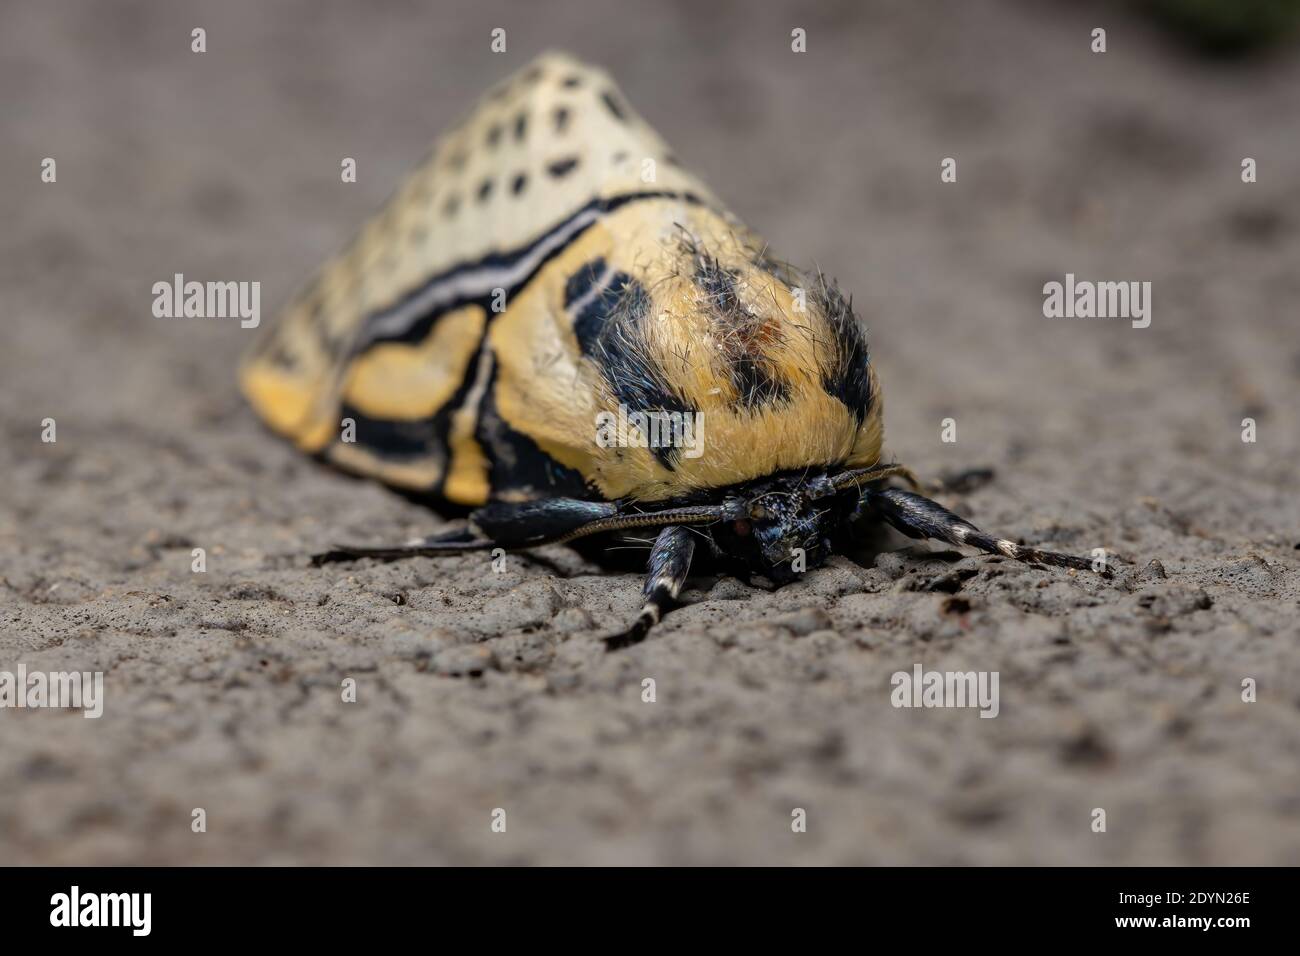 Adult Hieroglyphic Moth of the species Diphthera festiva Stock Photo